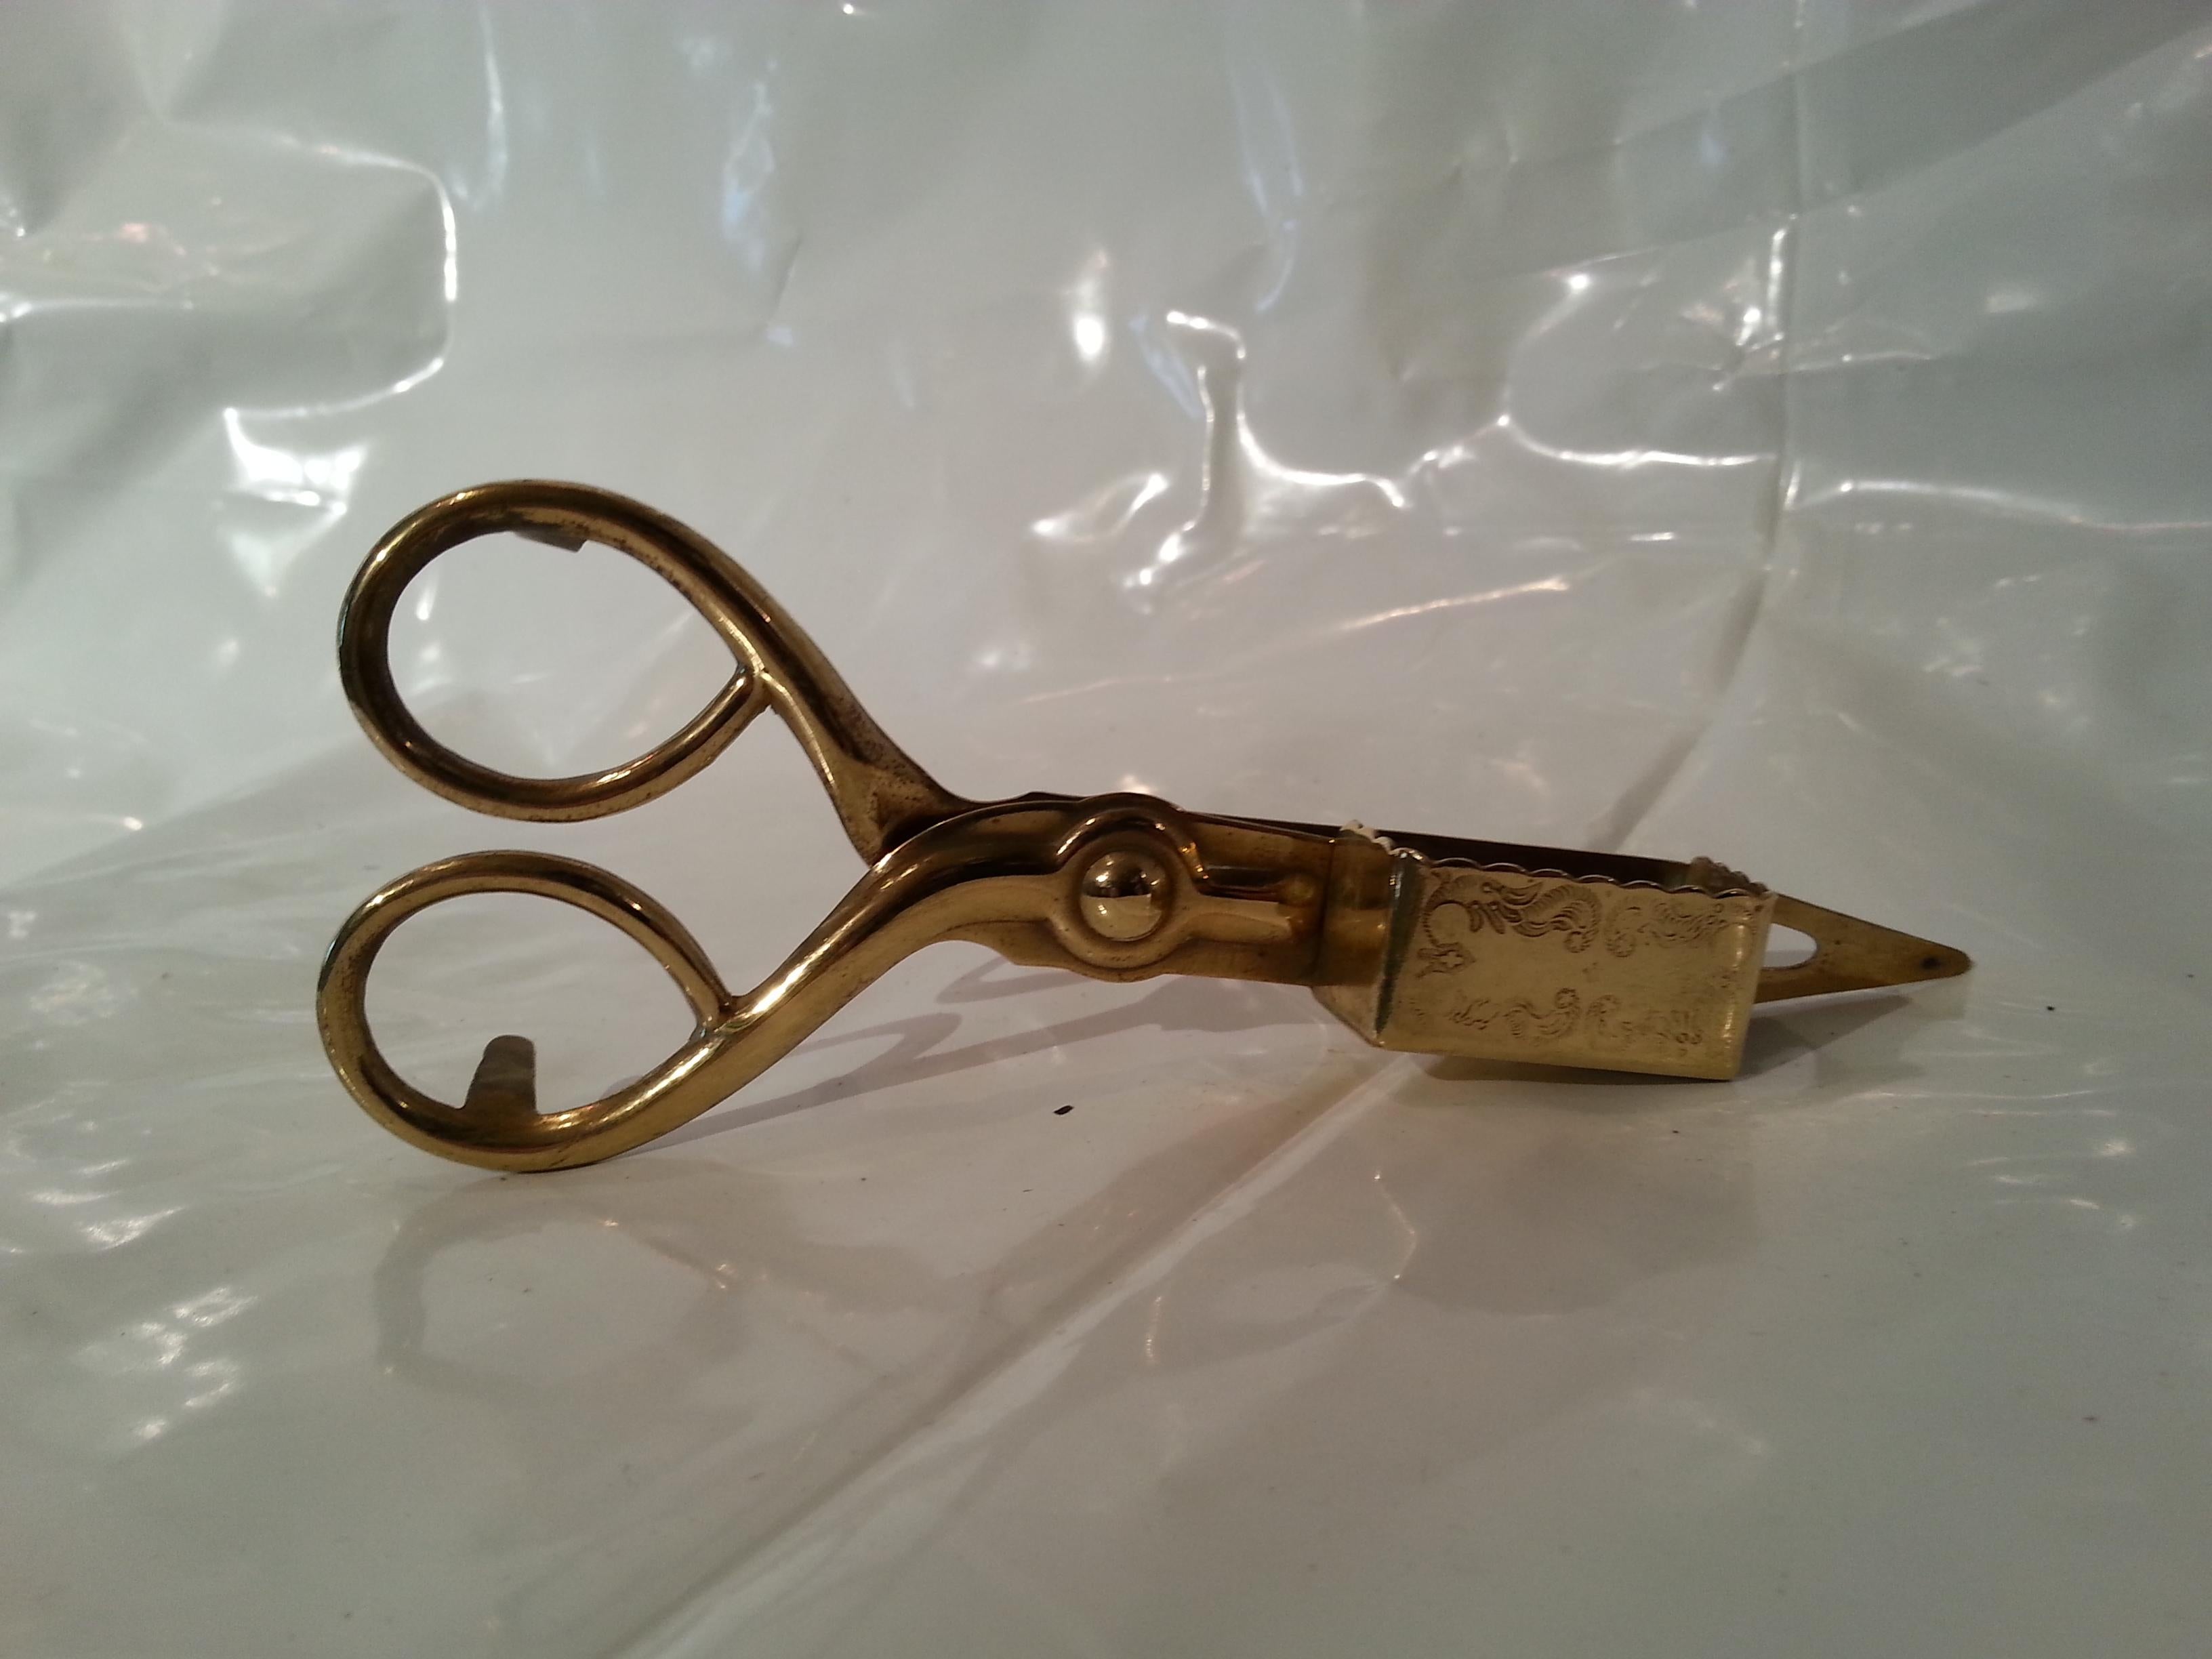 19th century Brass wick trimmer scissors.